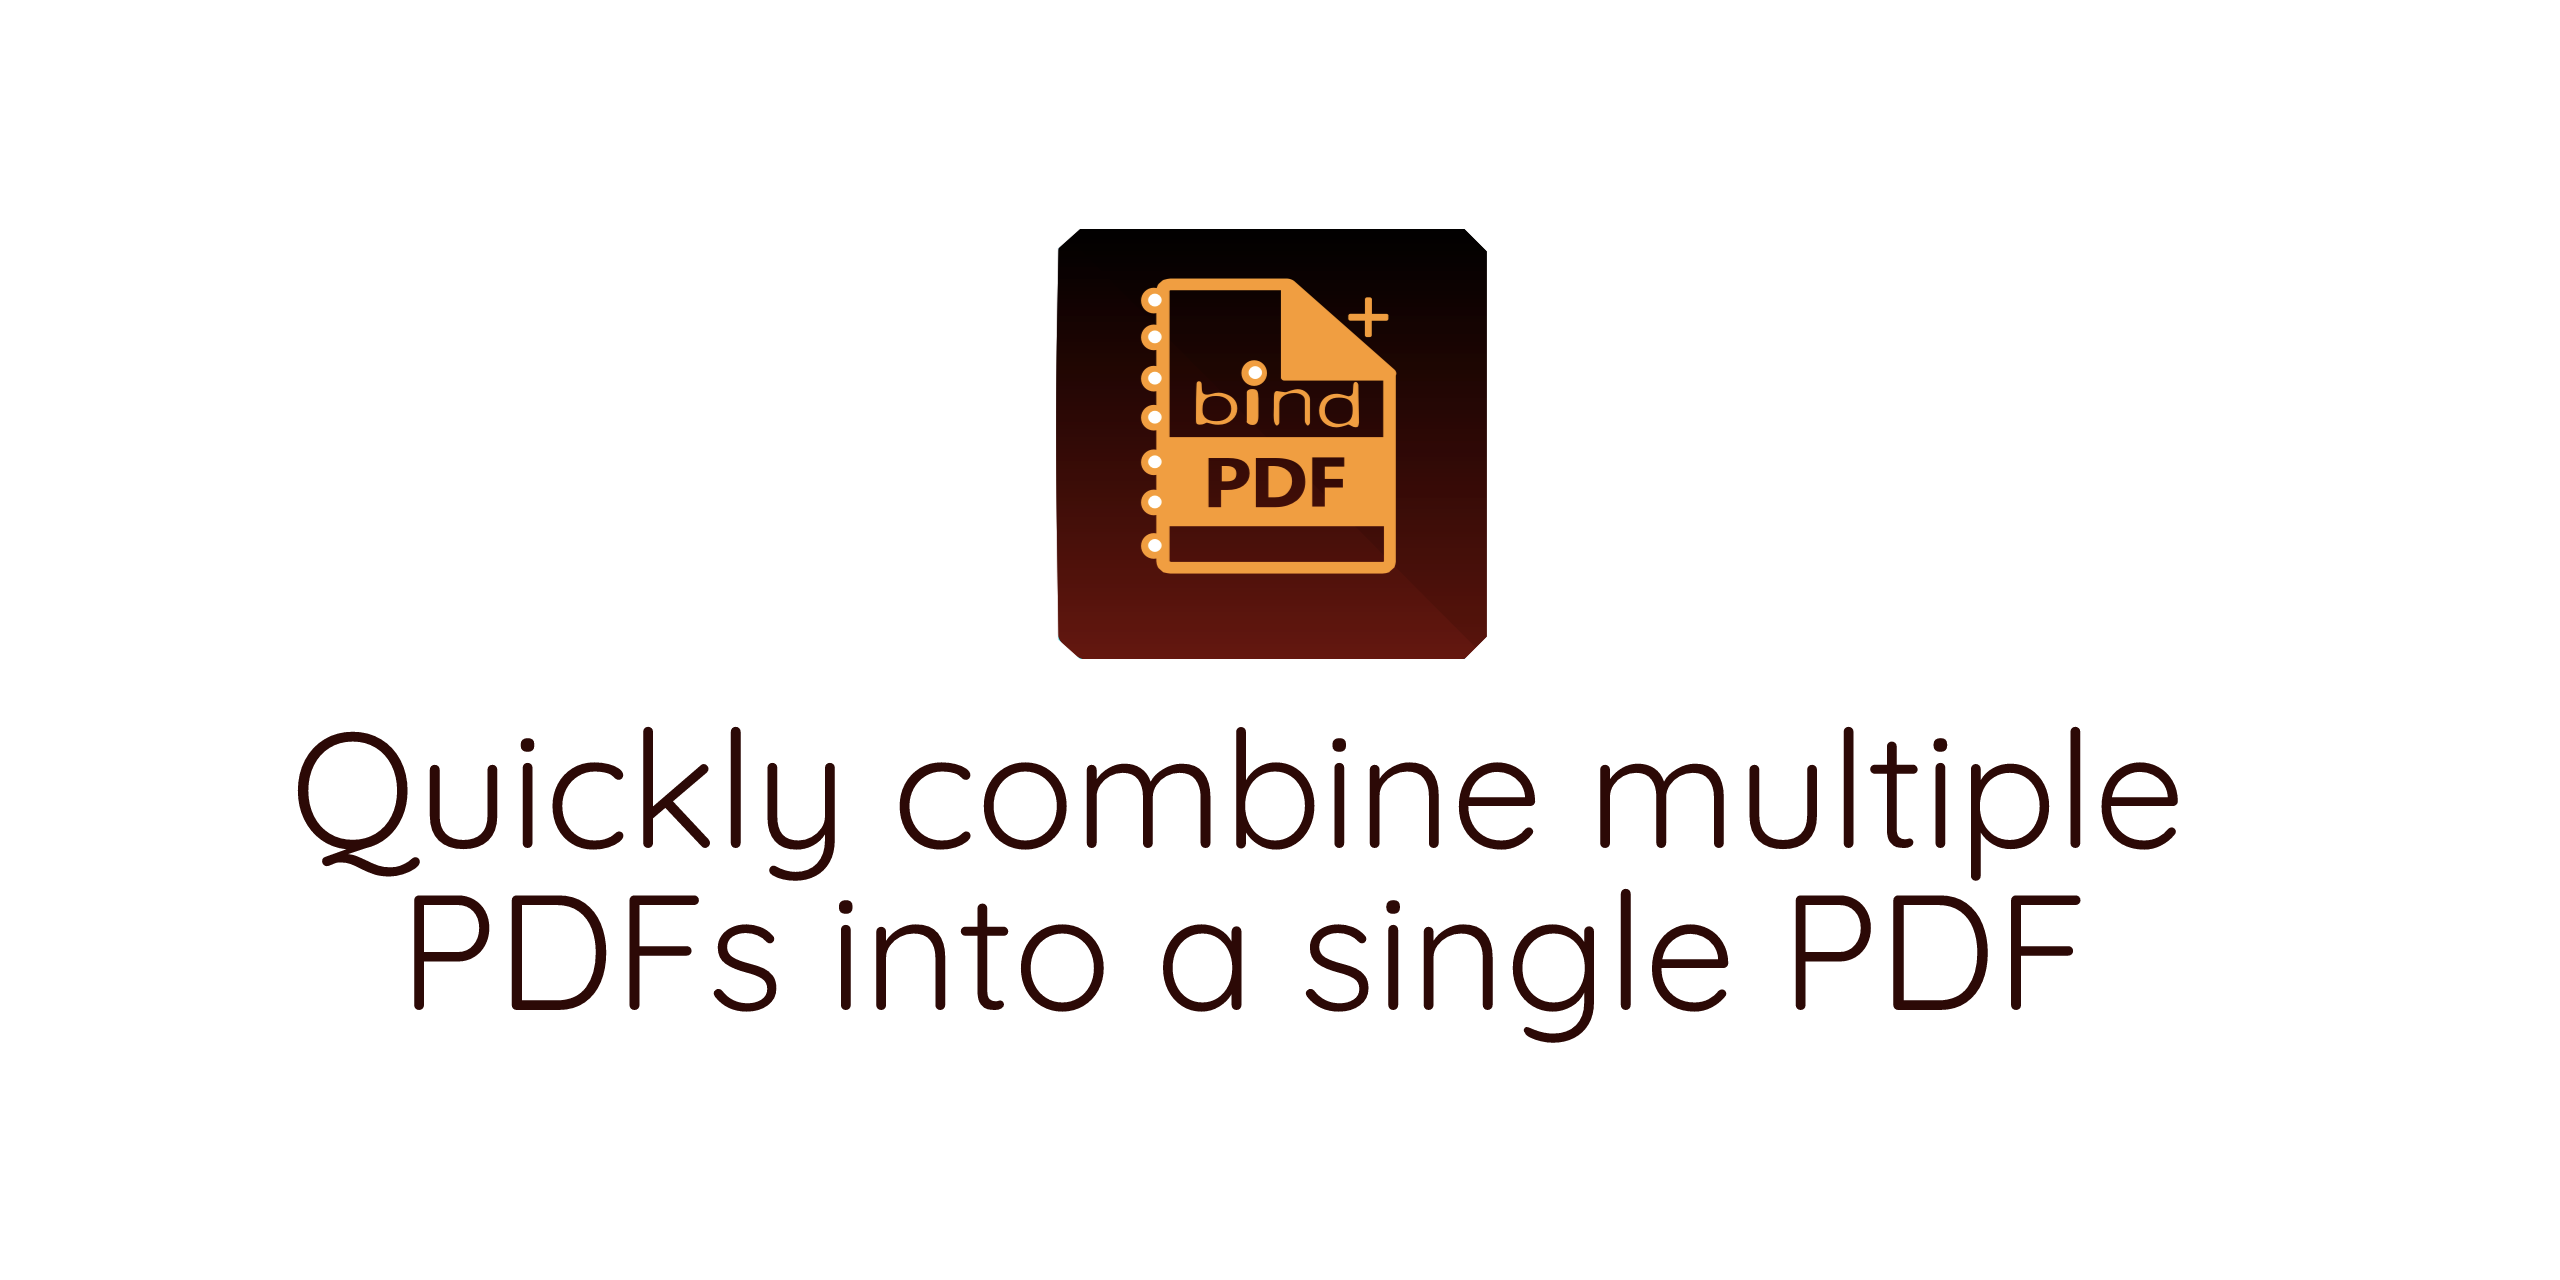 A friendly UI to combine multiple PDFs into a single PDF